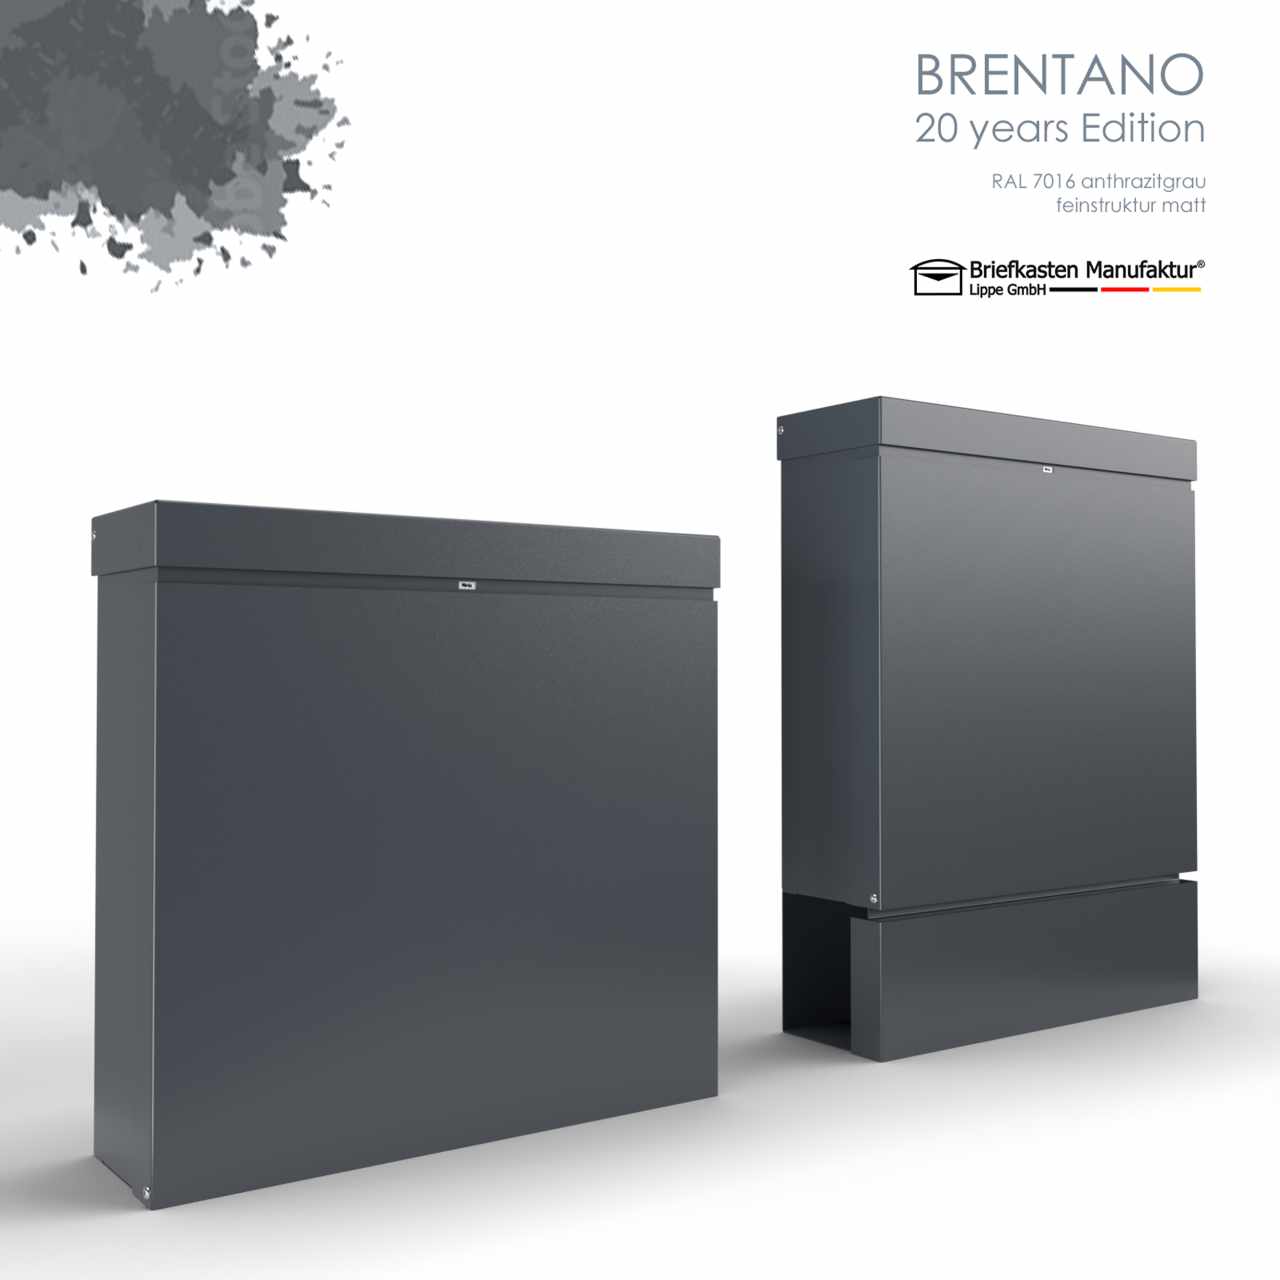 briefkasten-brentano-7016-20years-Edition-1